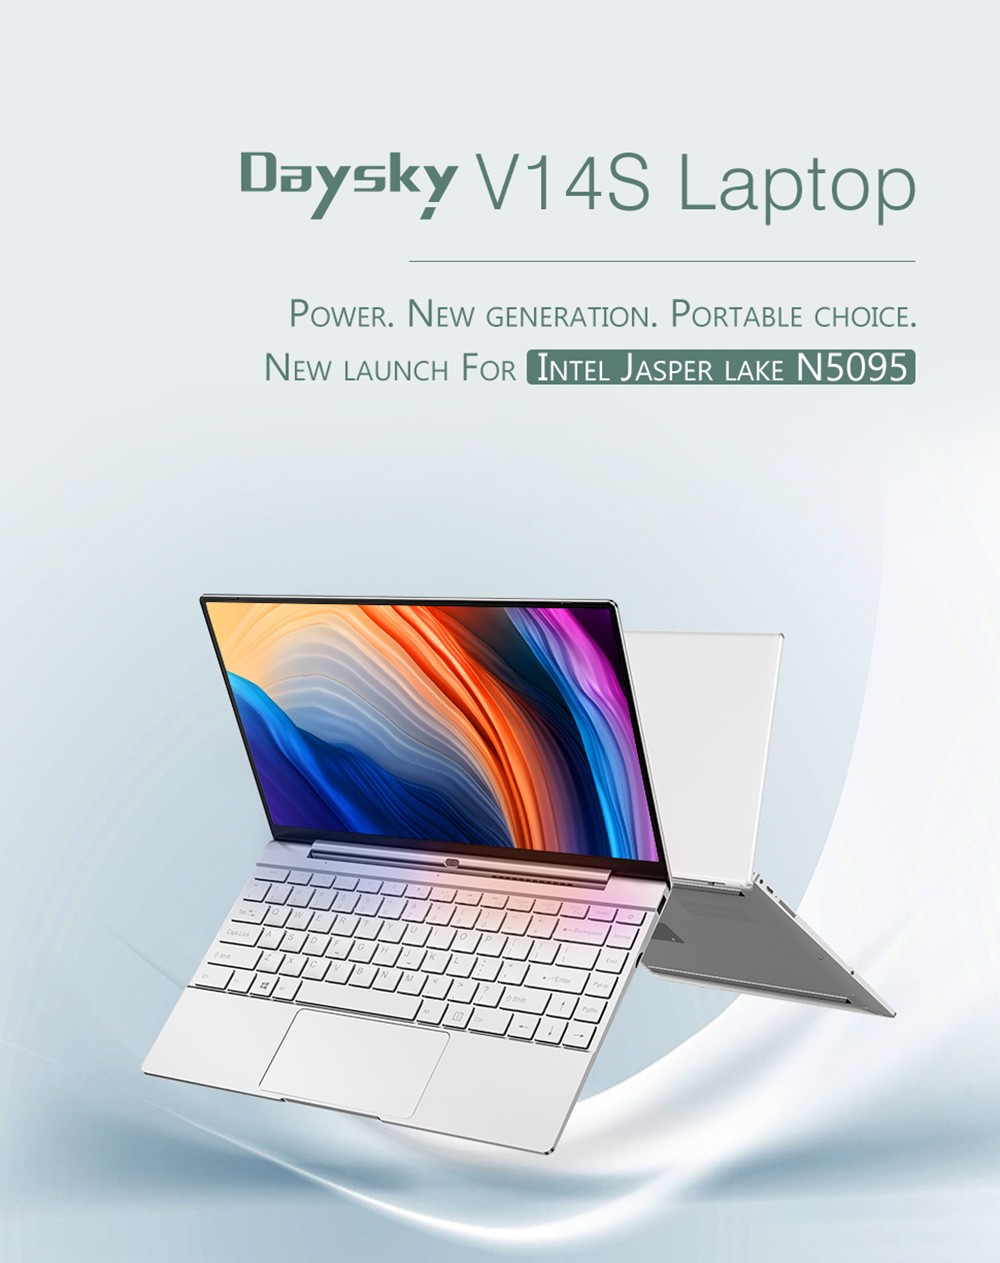 Daysky V14S 14.1 inch Laptop Intel Celeron N5095 12GB LPDDR4 512G SSD 1080P FHD with Backlight Windows 10 - Pink